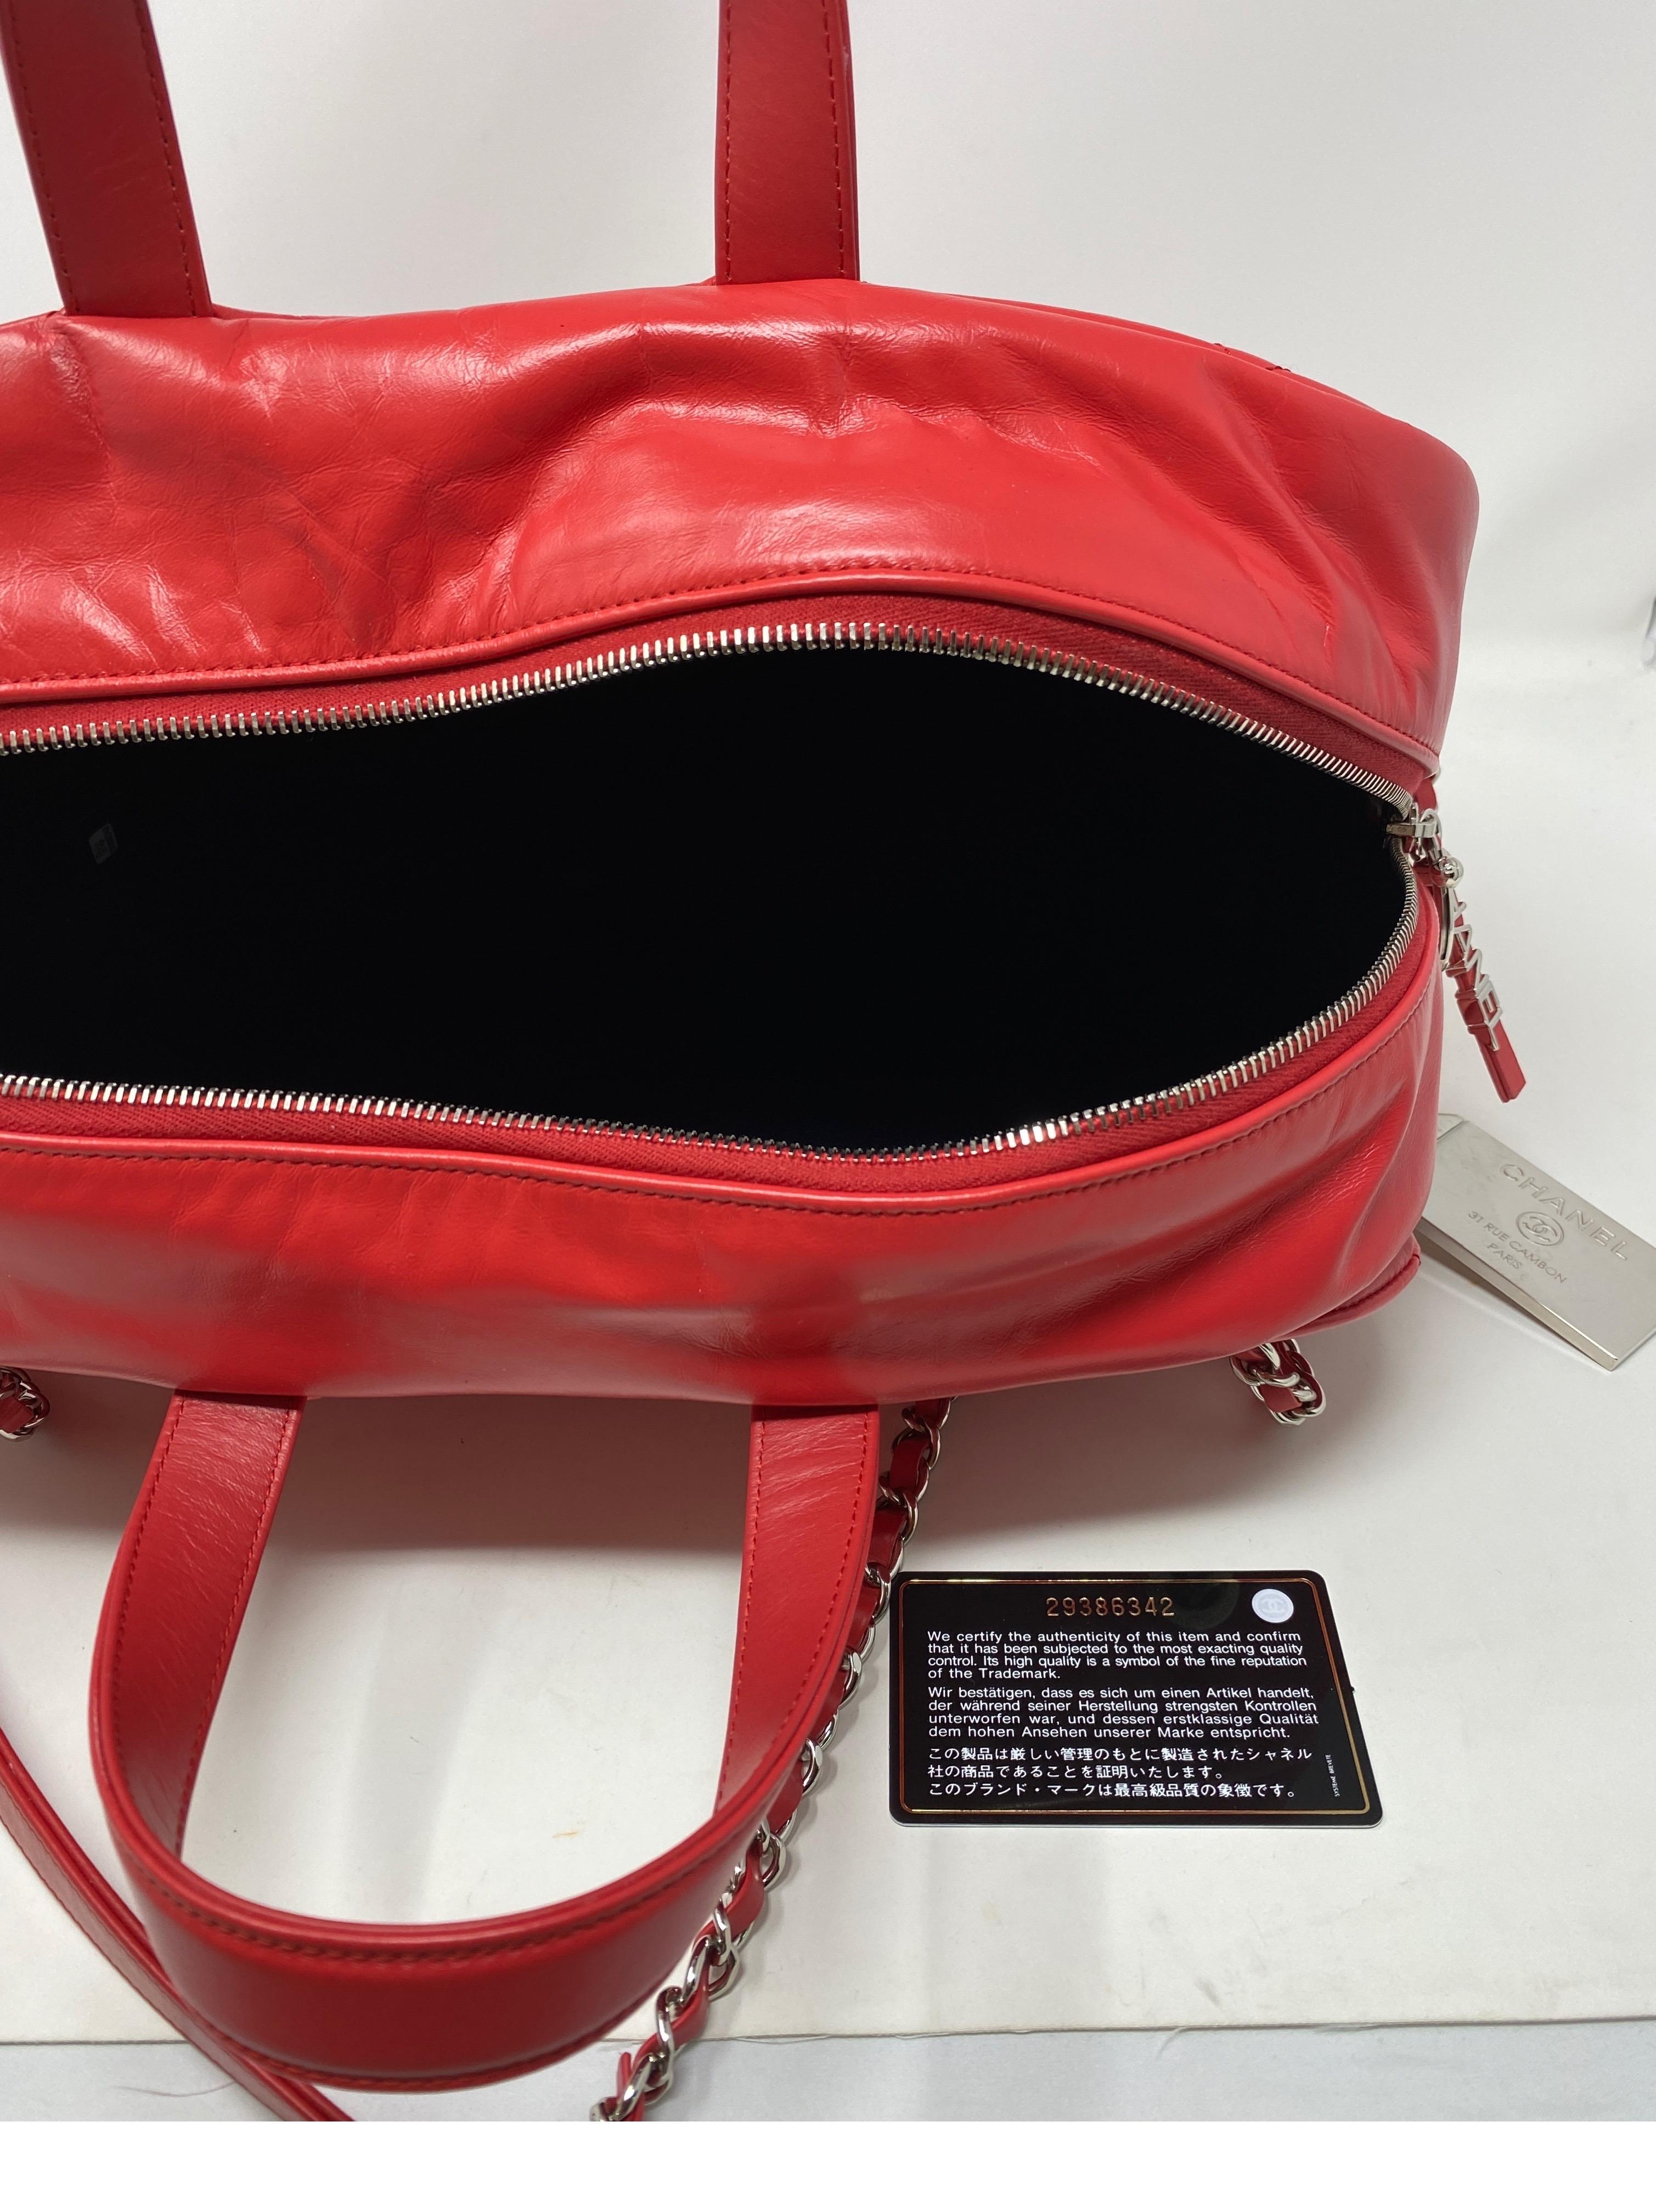 Chanel Large Red Bowler Bag  14